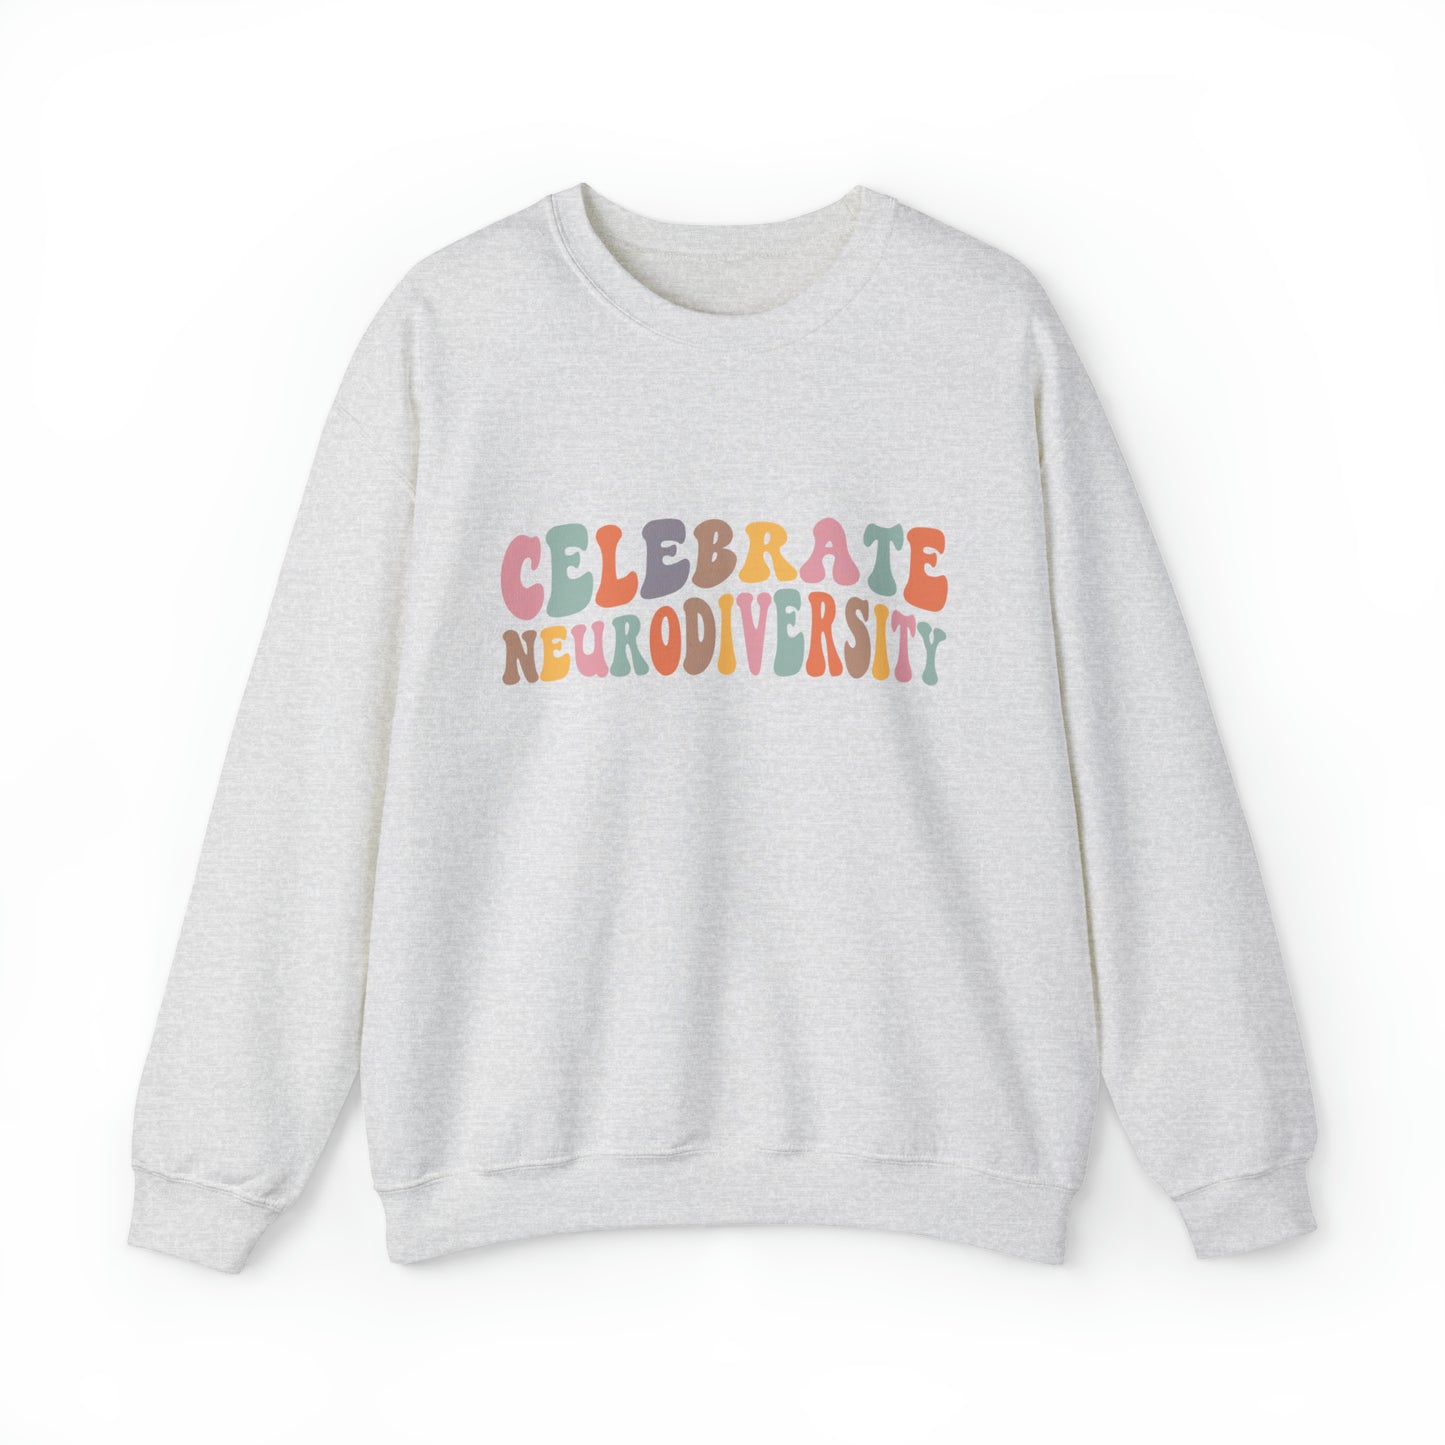 Celebrate Neurodiversity Women's Crewneck Sweatshirt